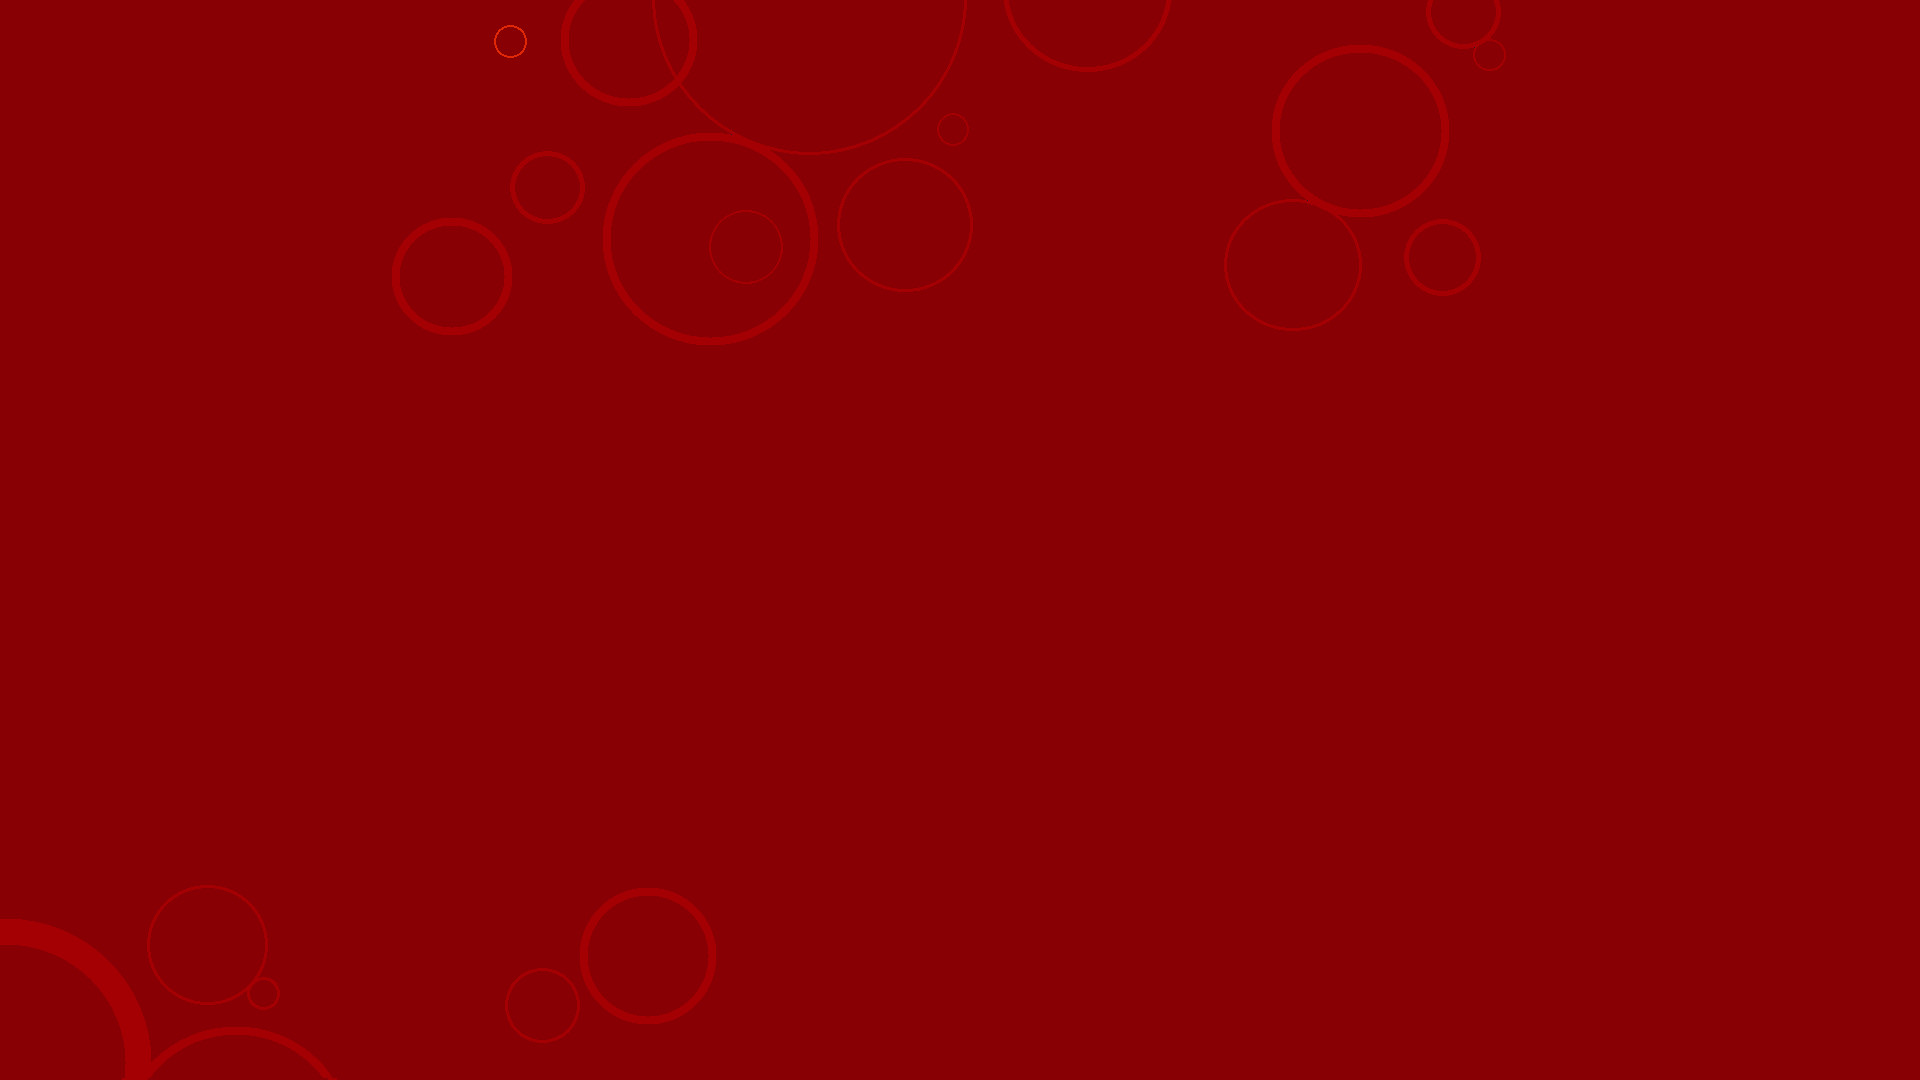 Dark Red Windows 8 Bubbles Background by gifteddeviant on DeviantArt